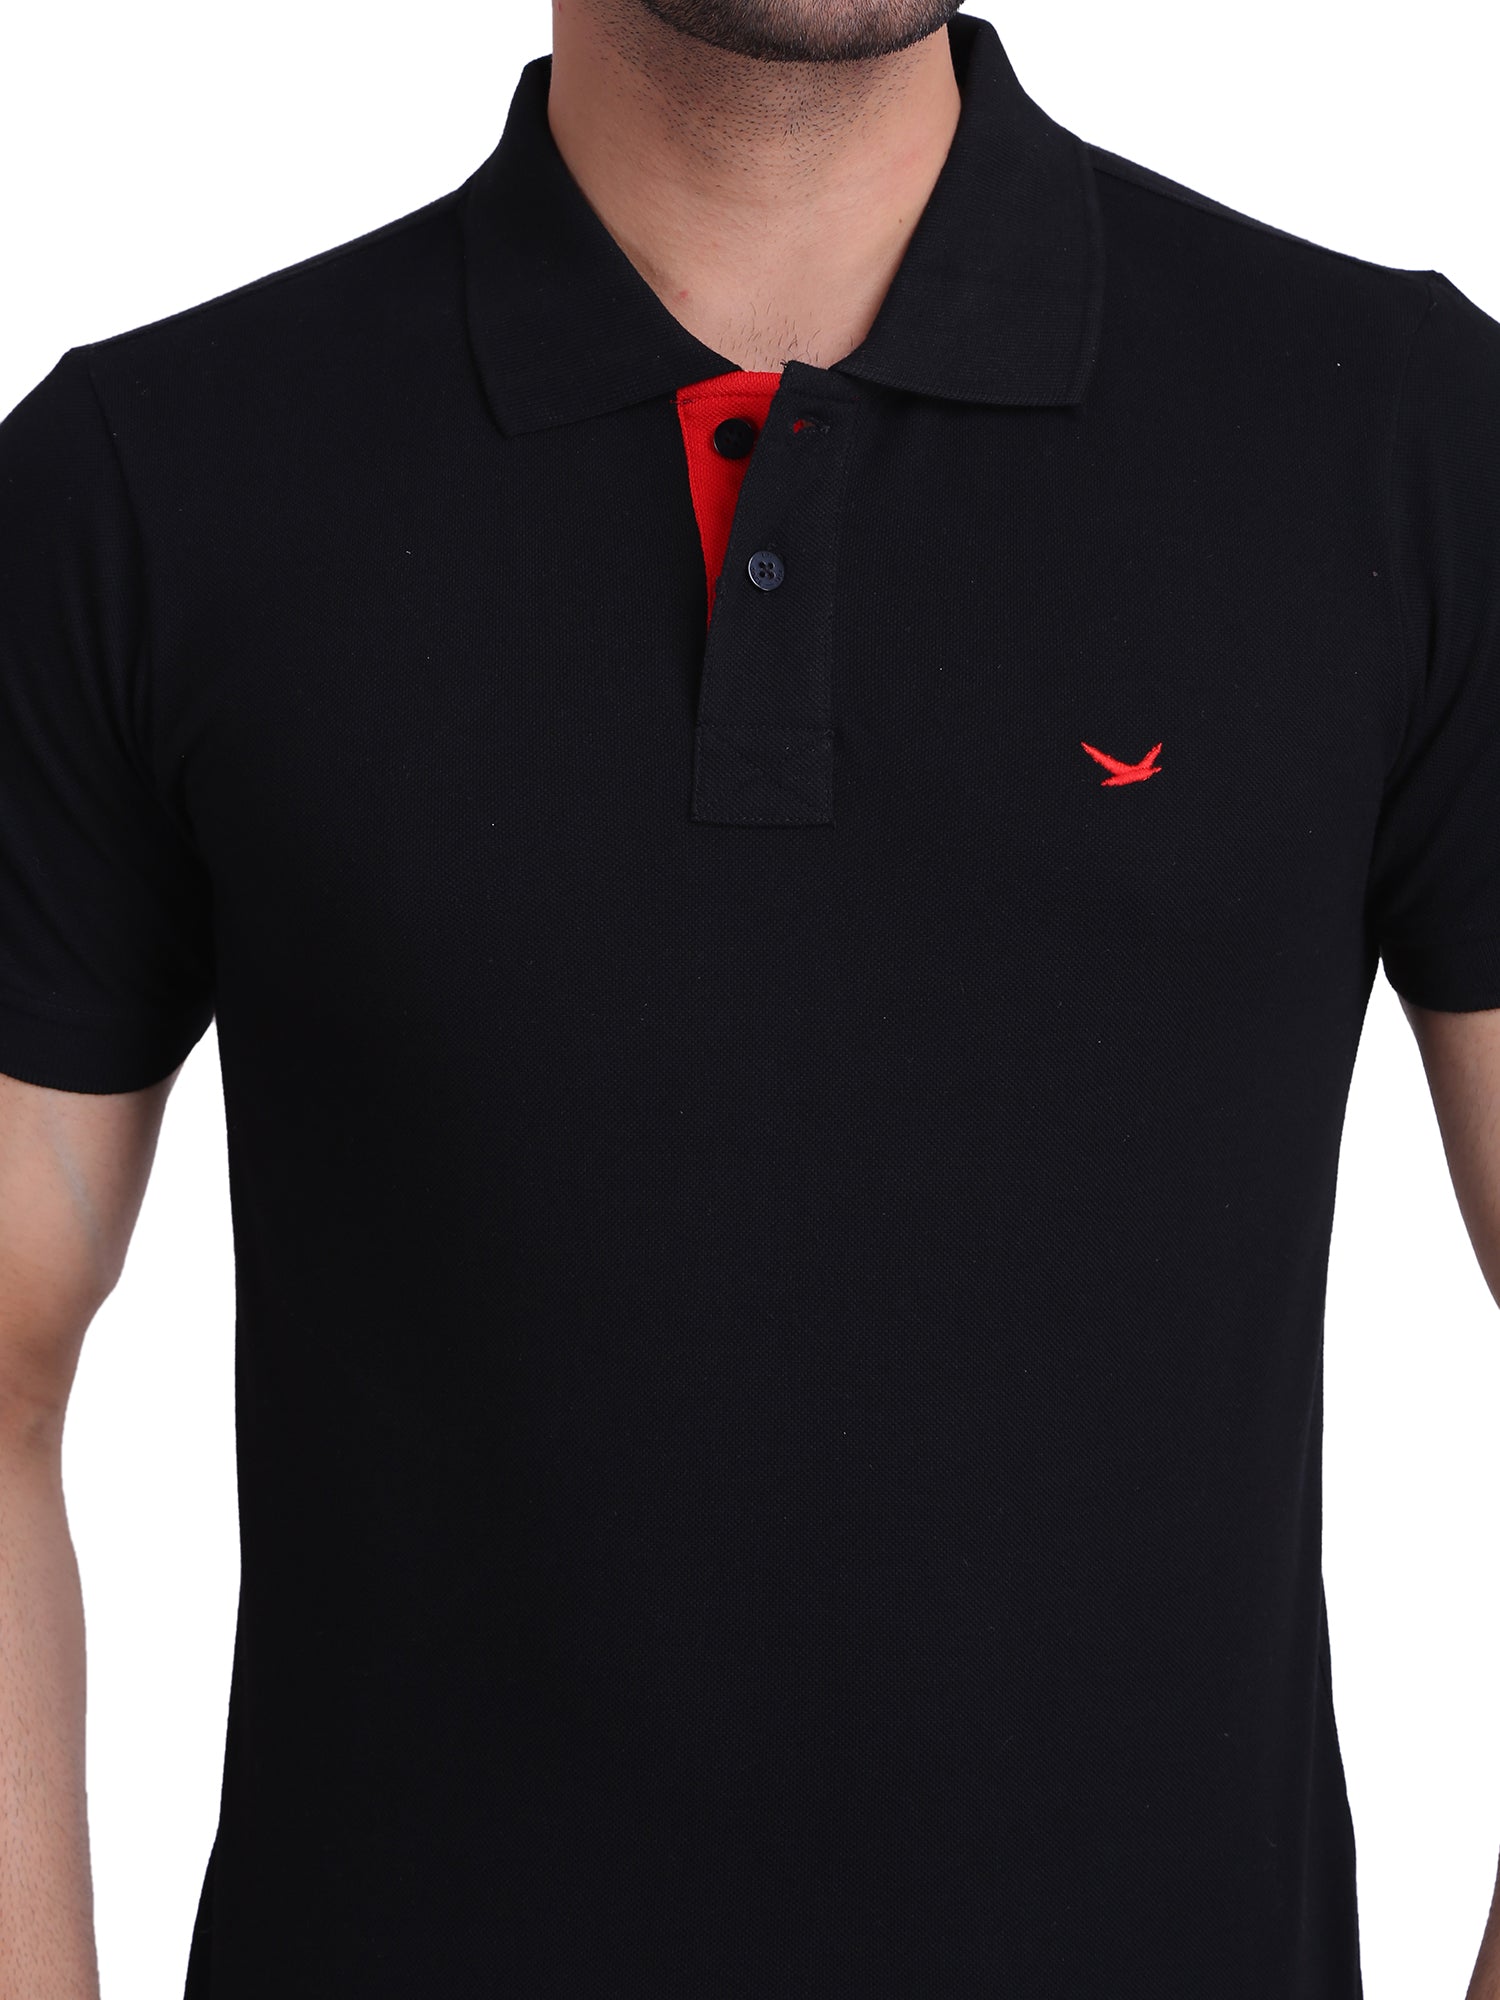 HiFlyers Black Polo T-Shirt